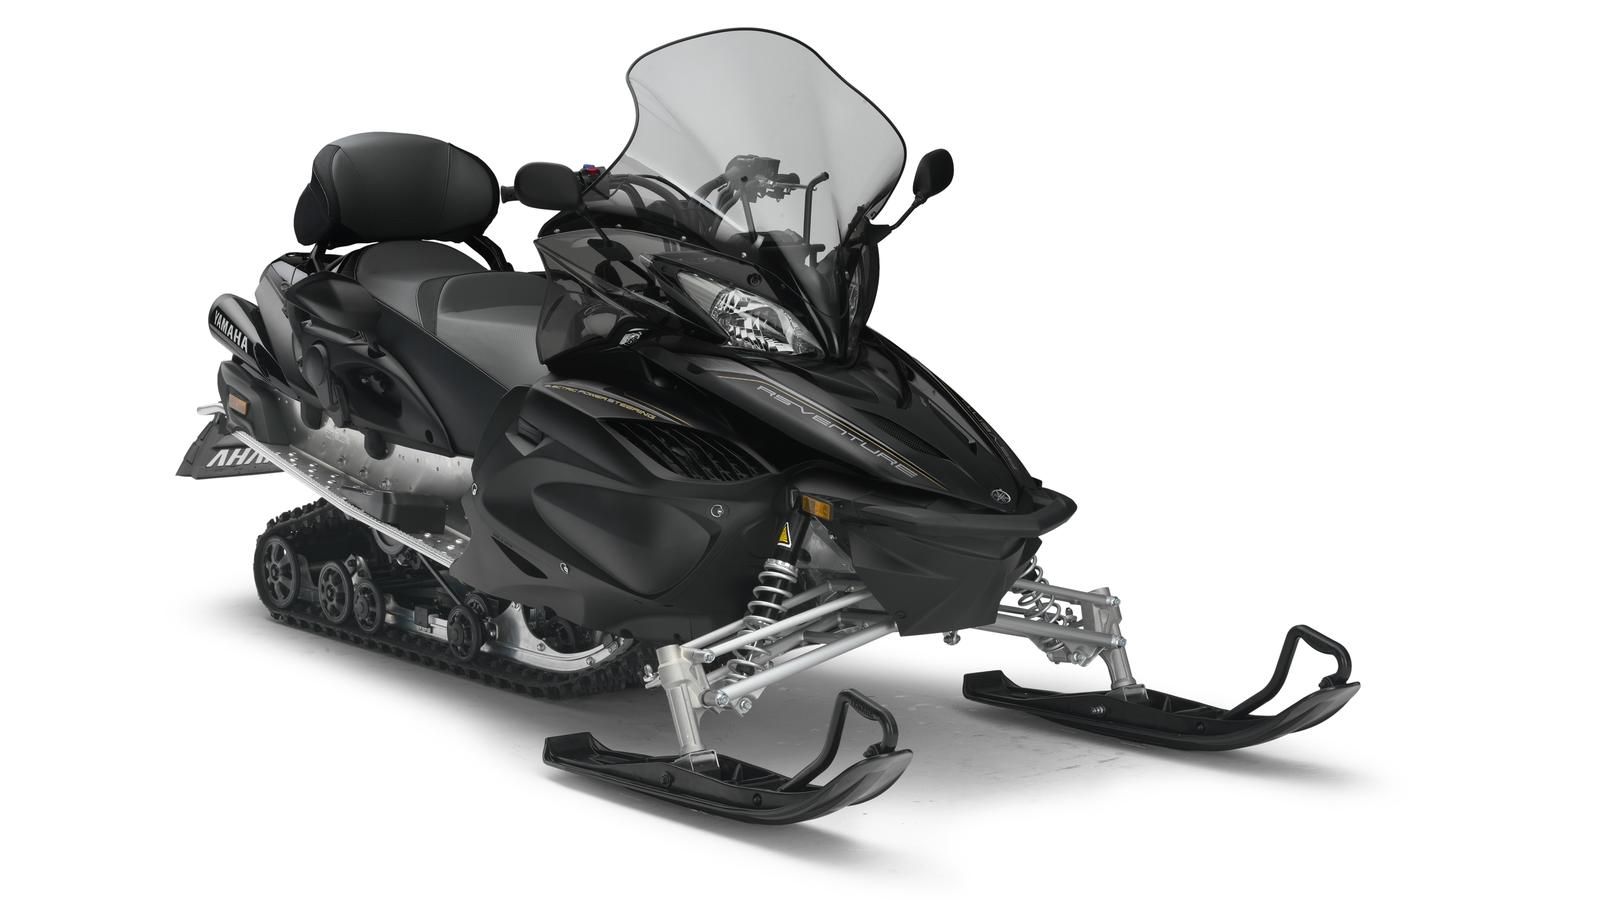 2013 Yamaha RS Venture TF